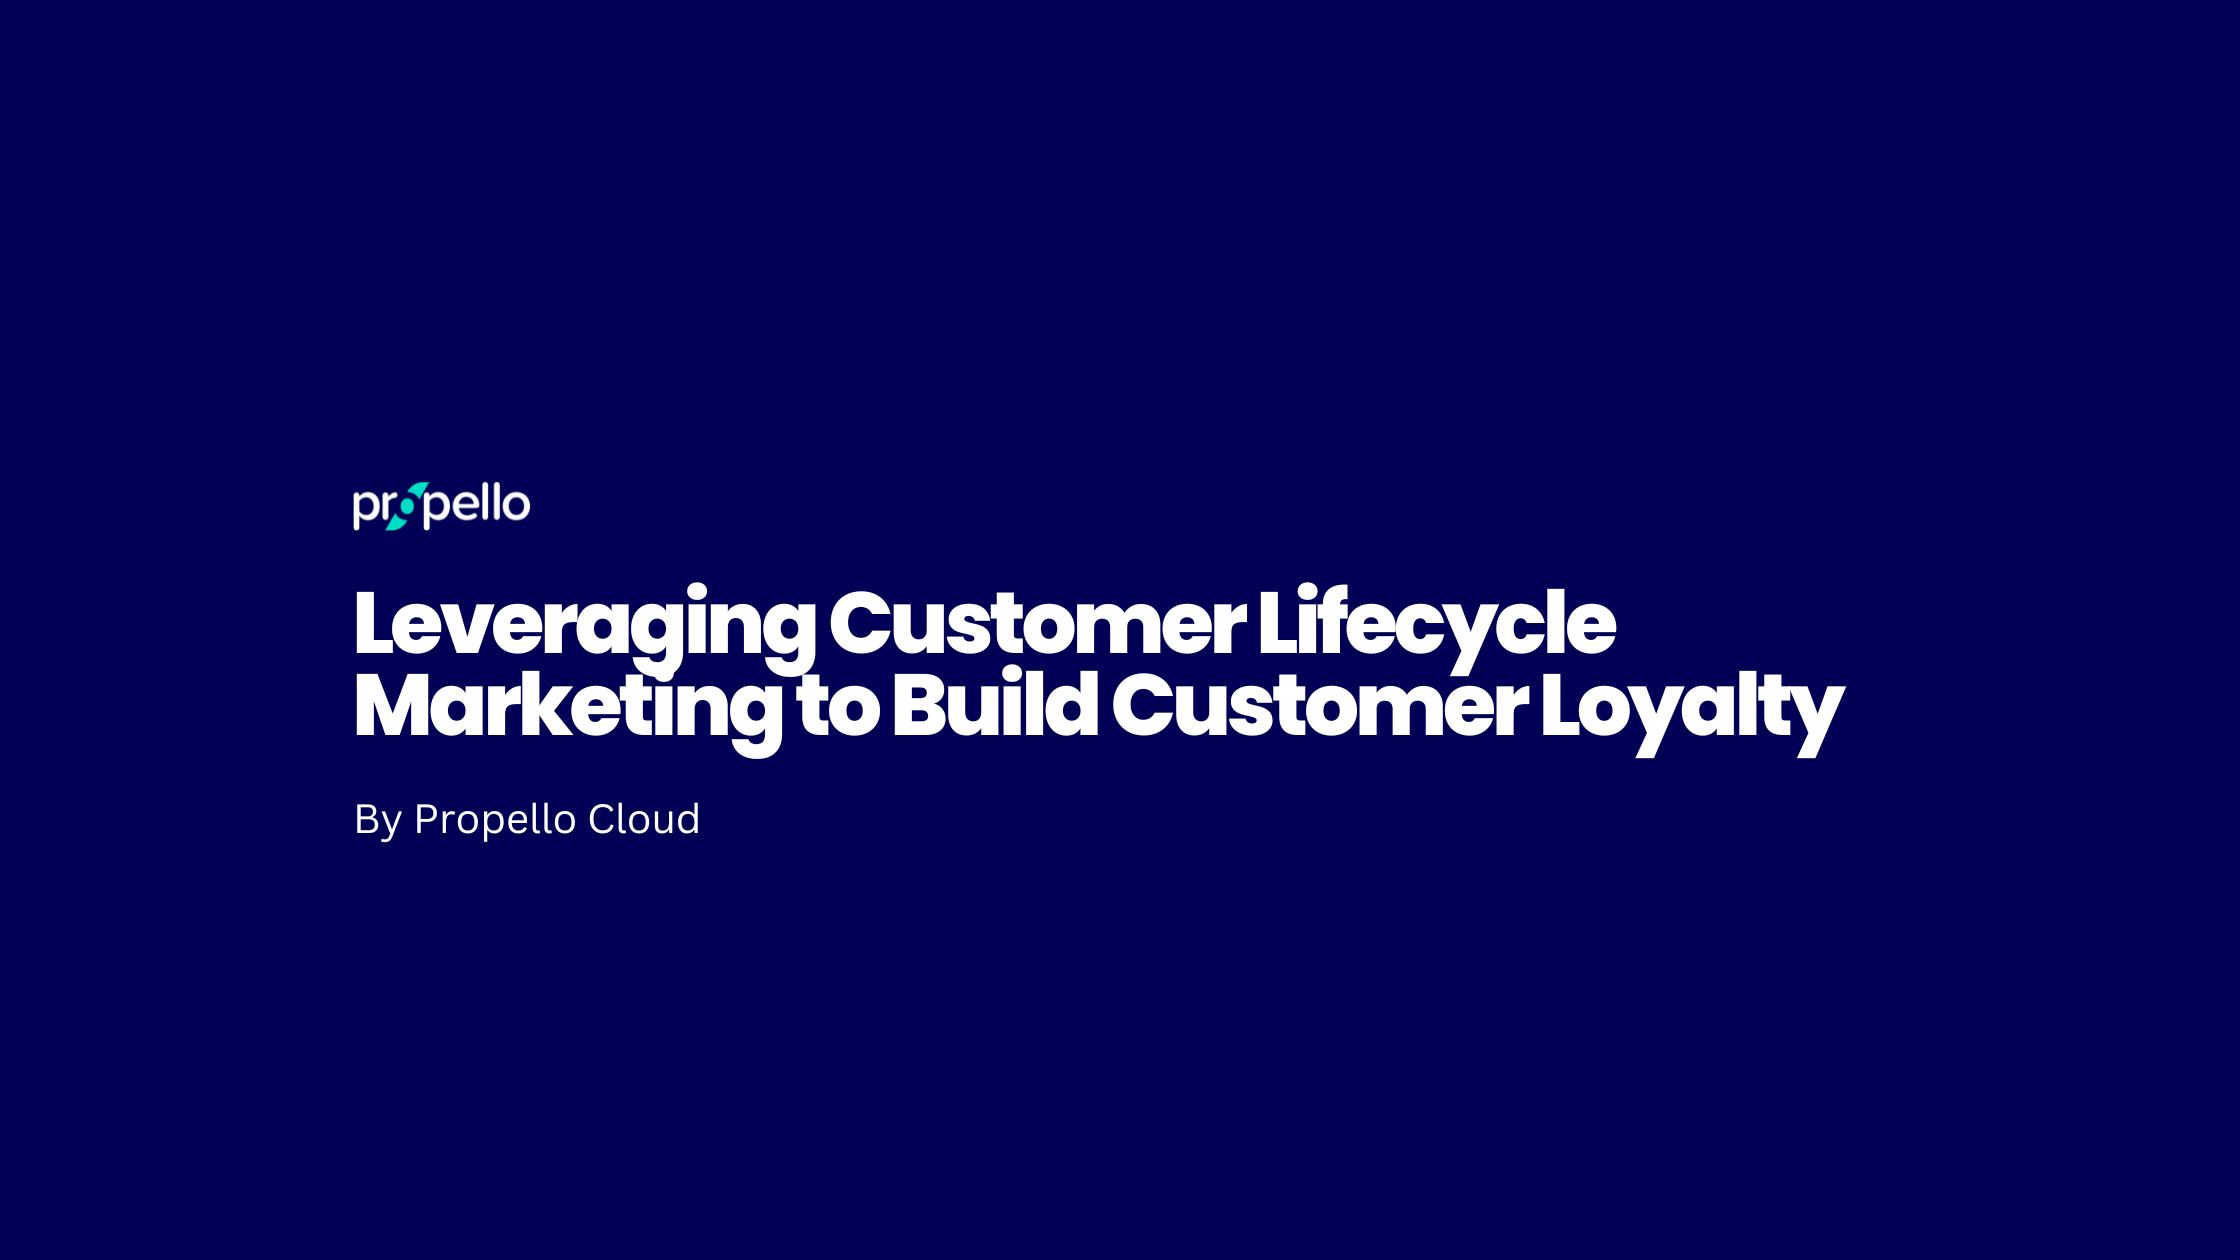 Customer Lifecycle Marketing